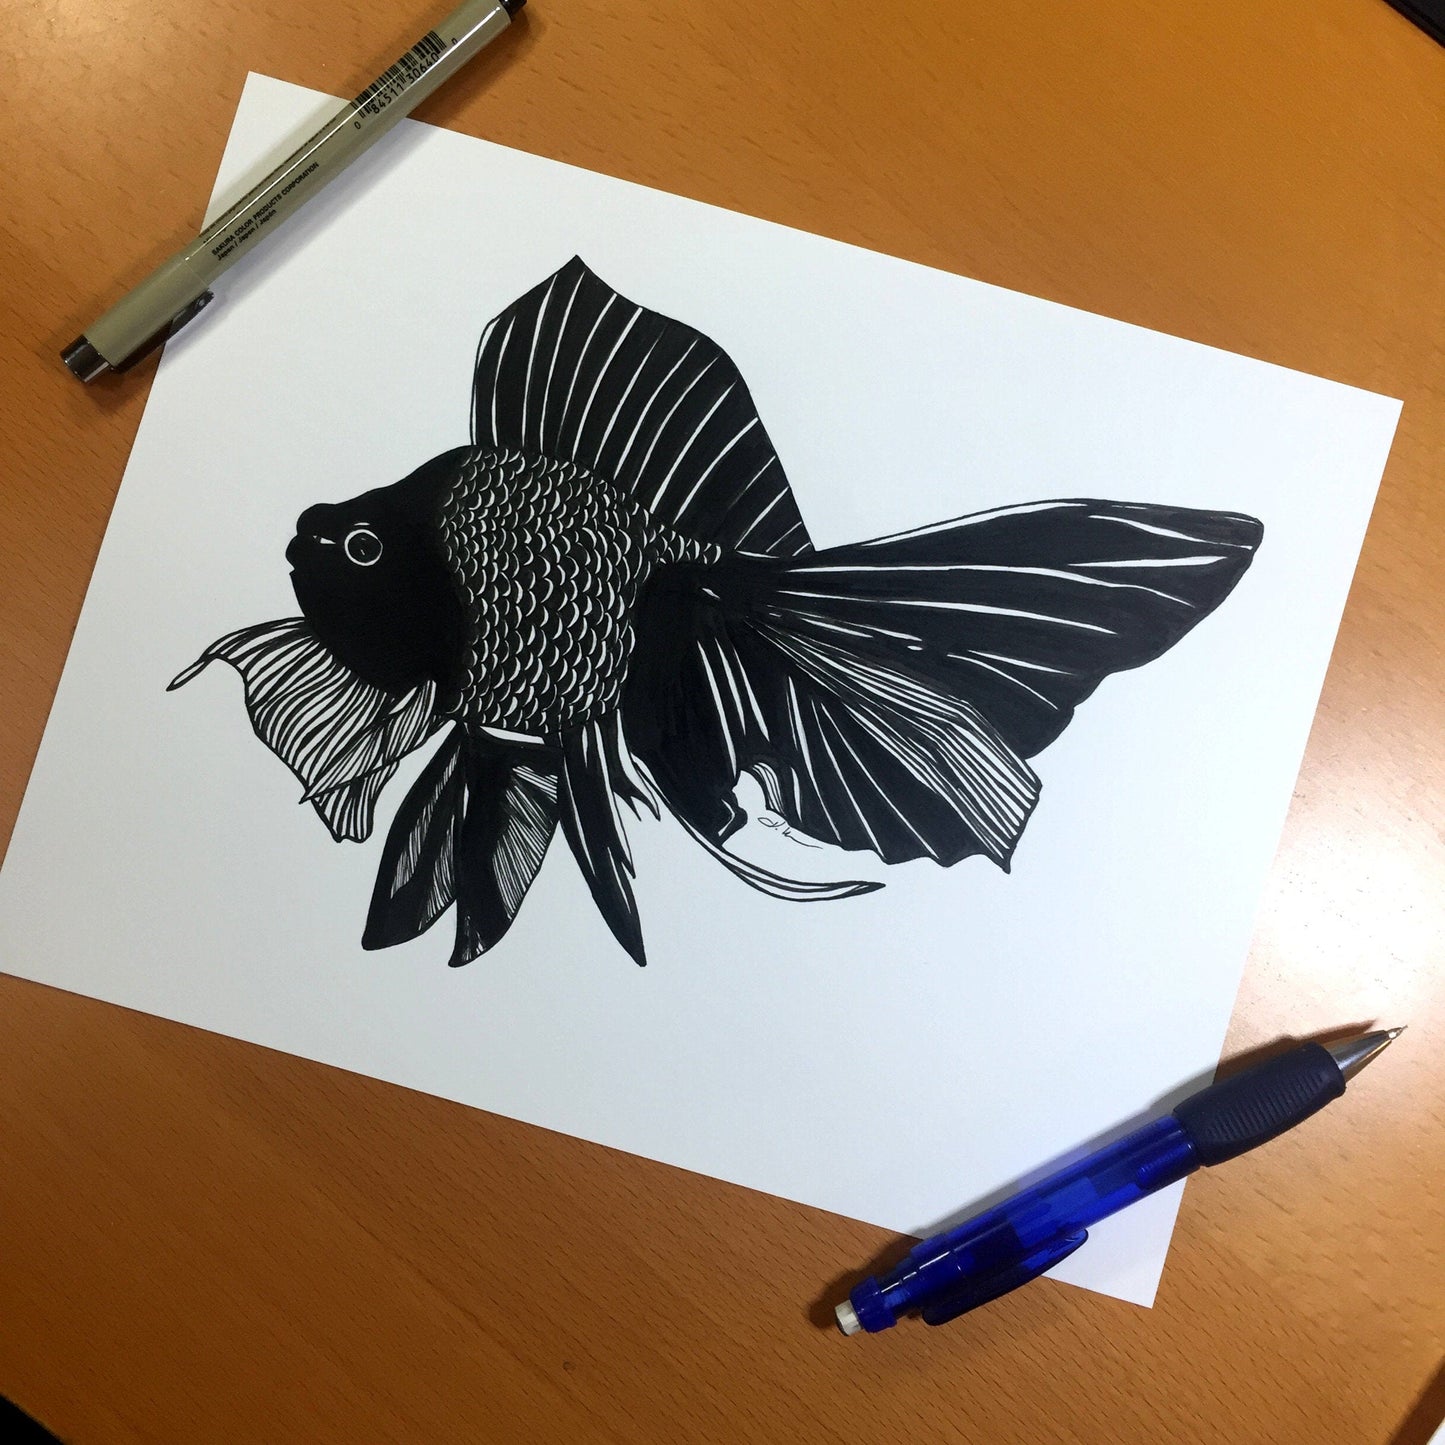 PinkPolish Design Original Art "Beauty Fish" Goldfish Inspired Original Ink Illustration